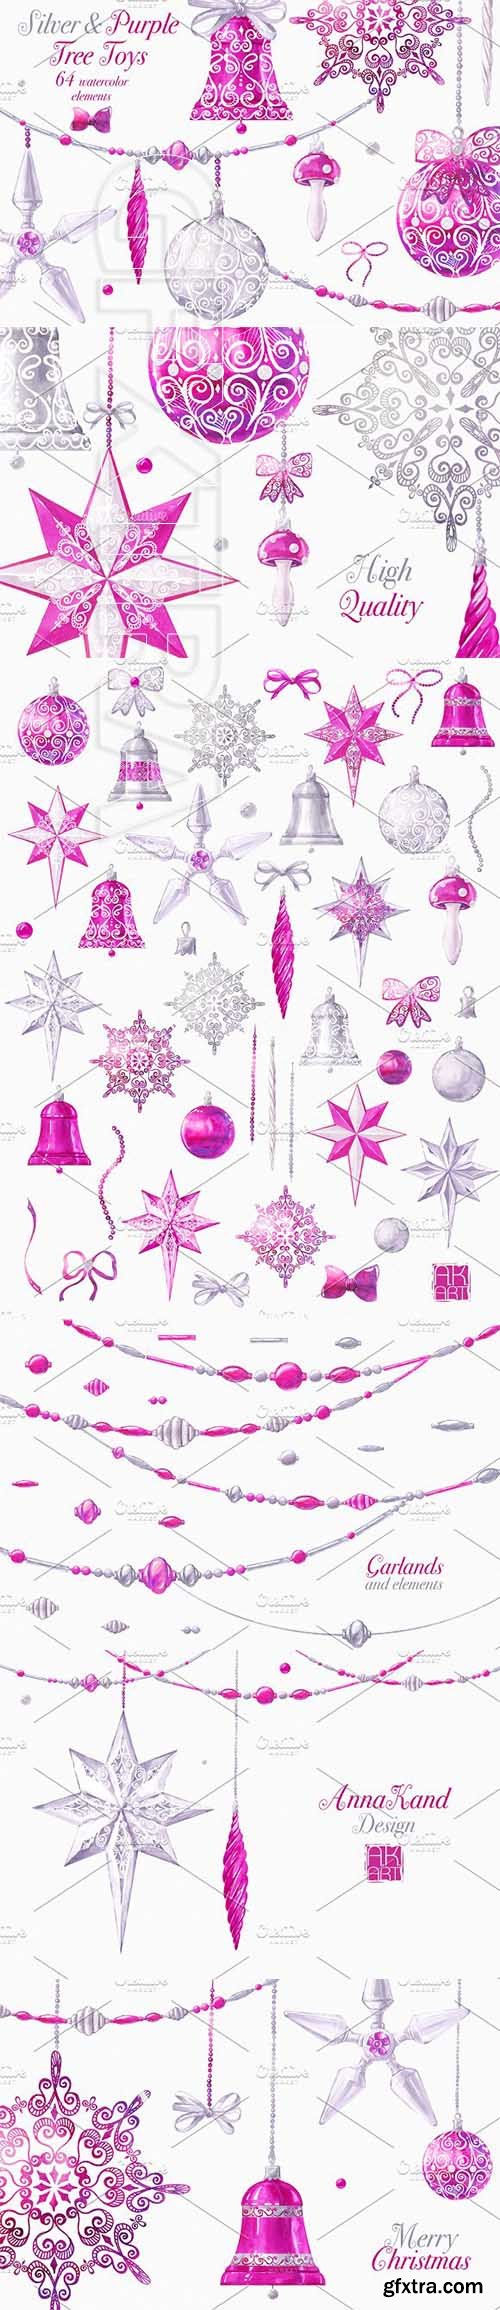 CreativeMarket - Christmas watercolor clipart set 2111248